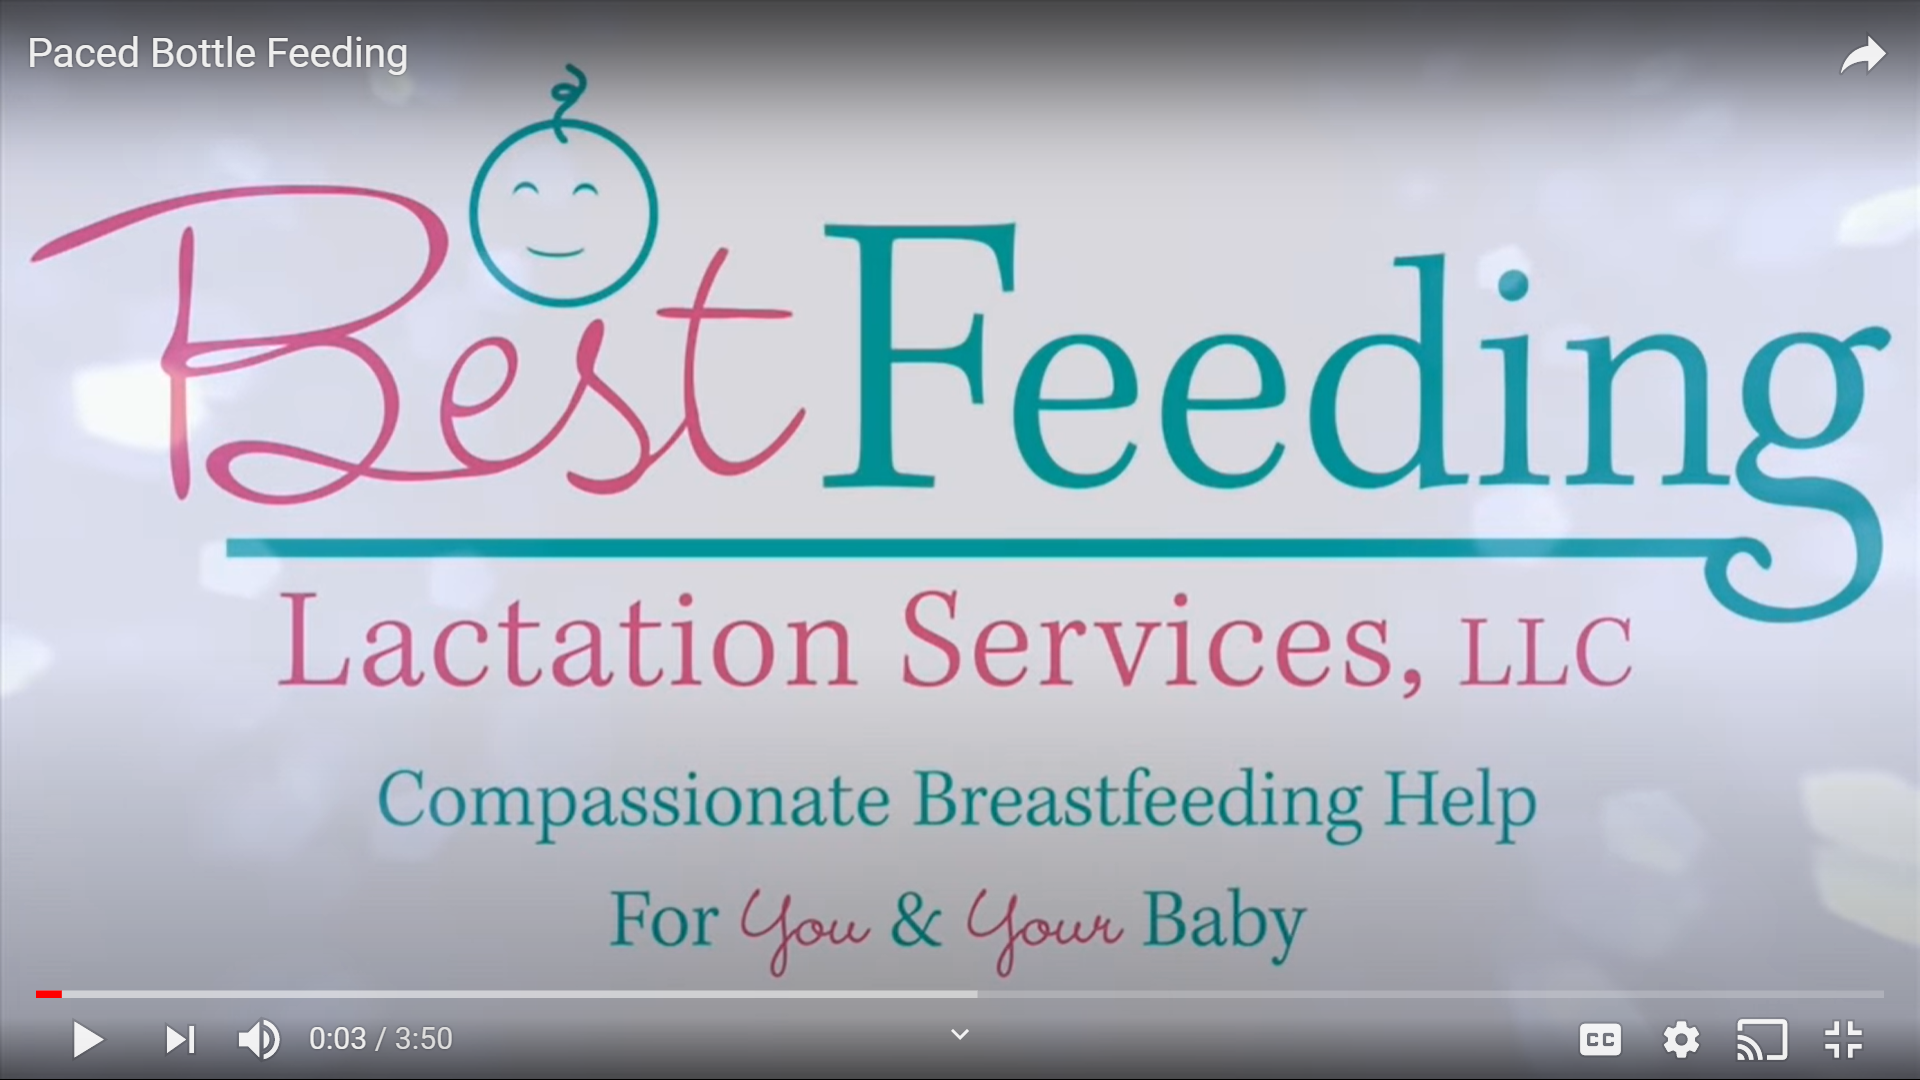 Paced Bottle Feeding video (Best Feeding Lactation Services, LLC)